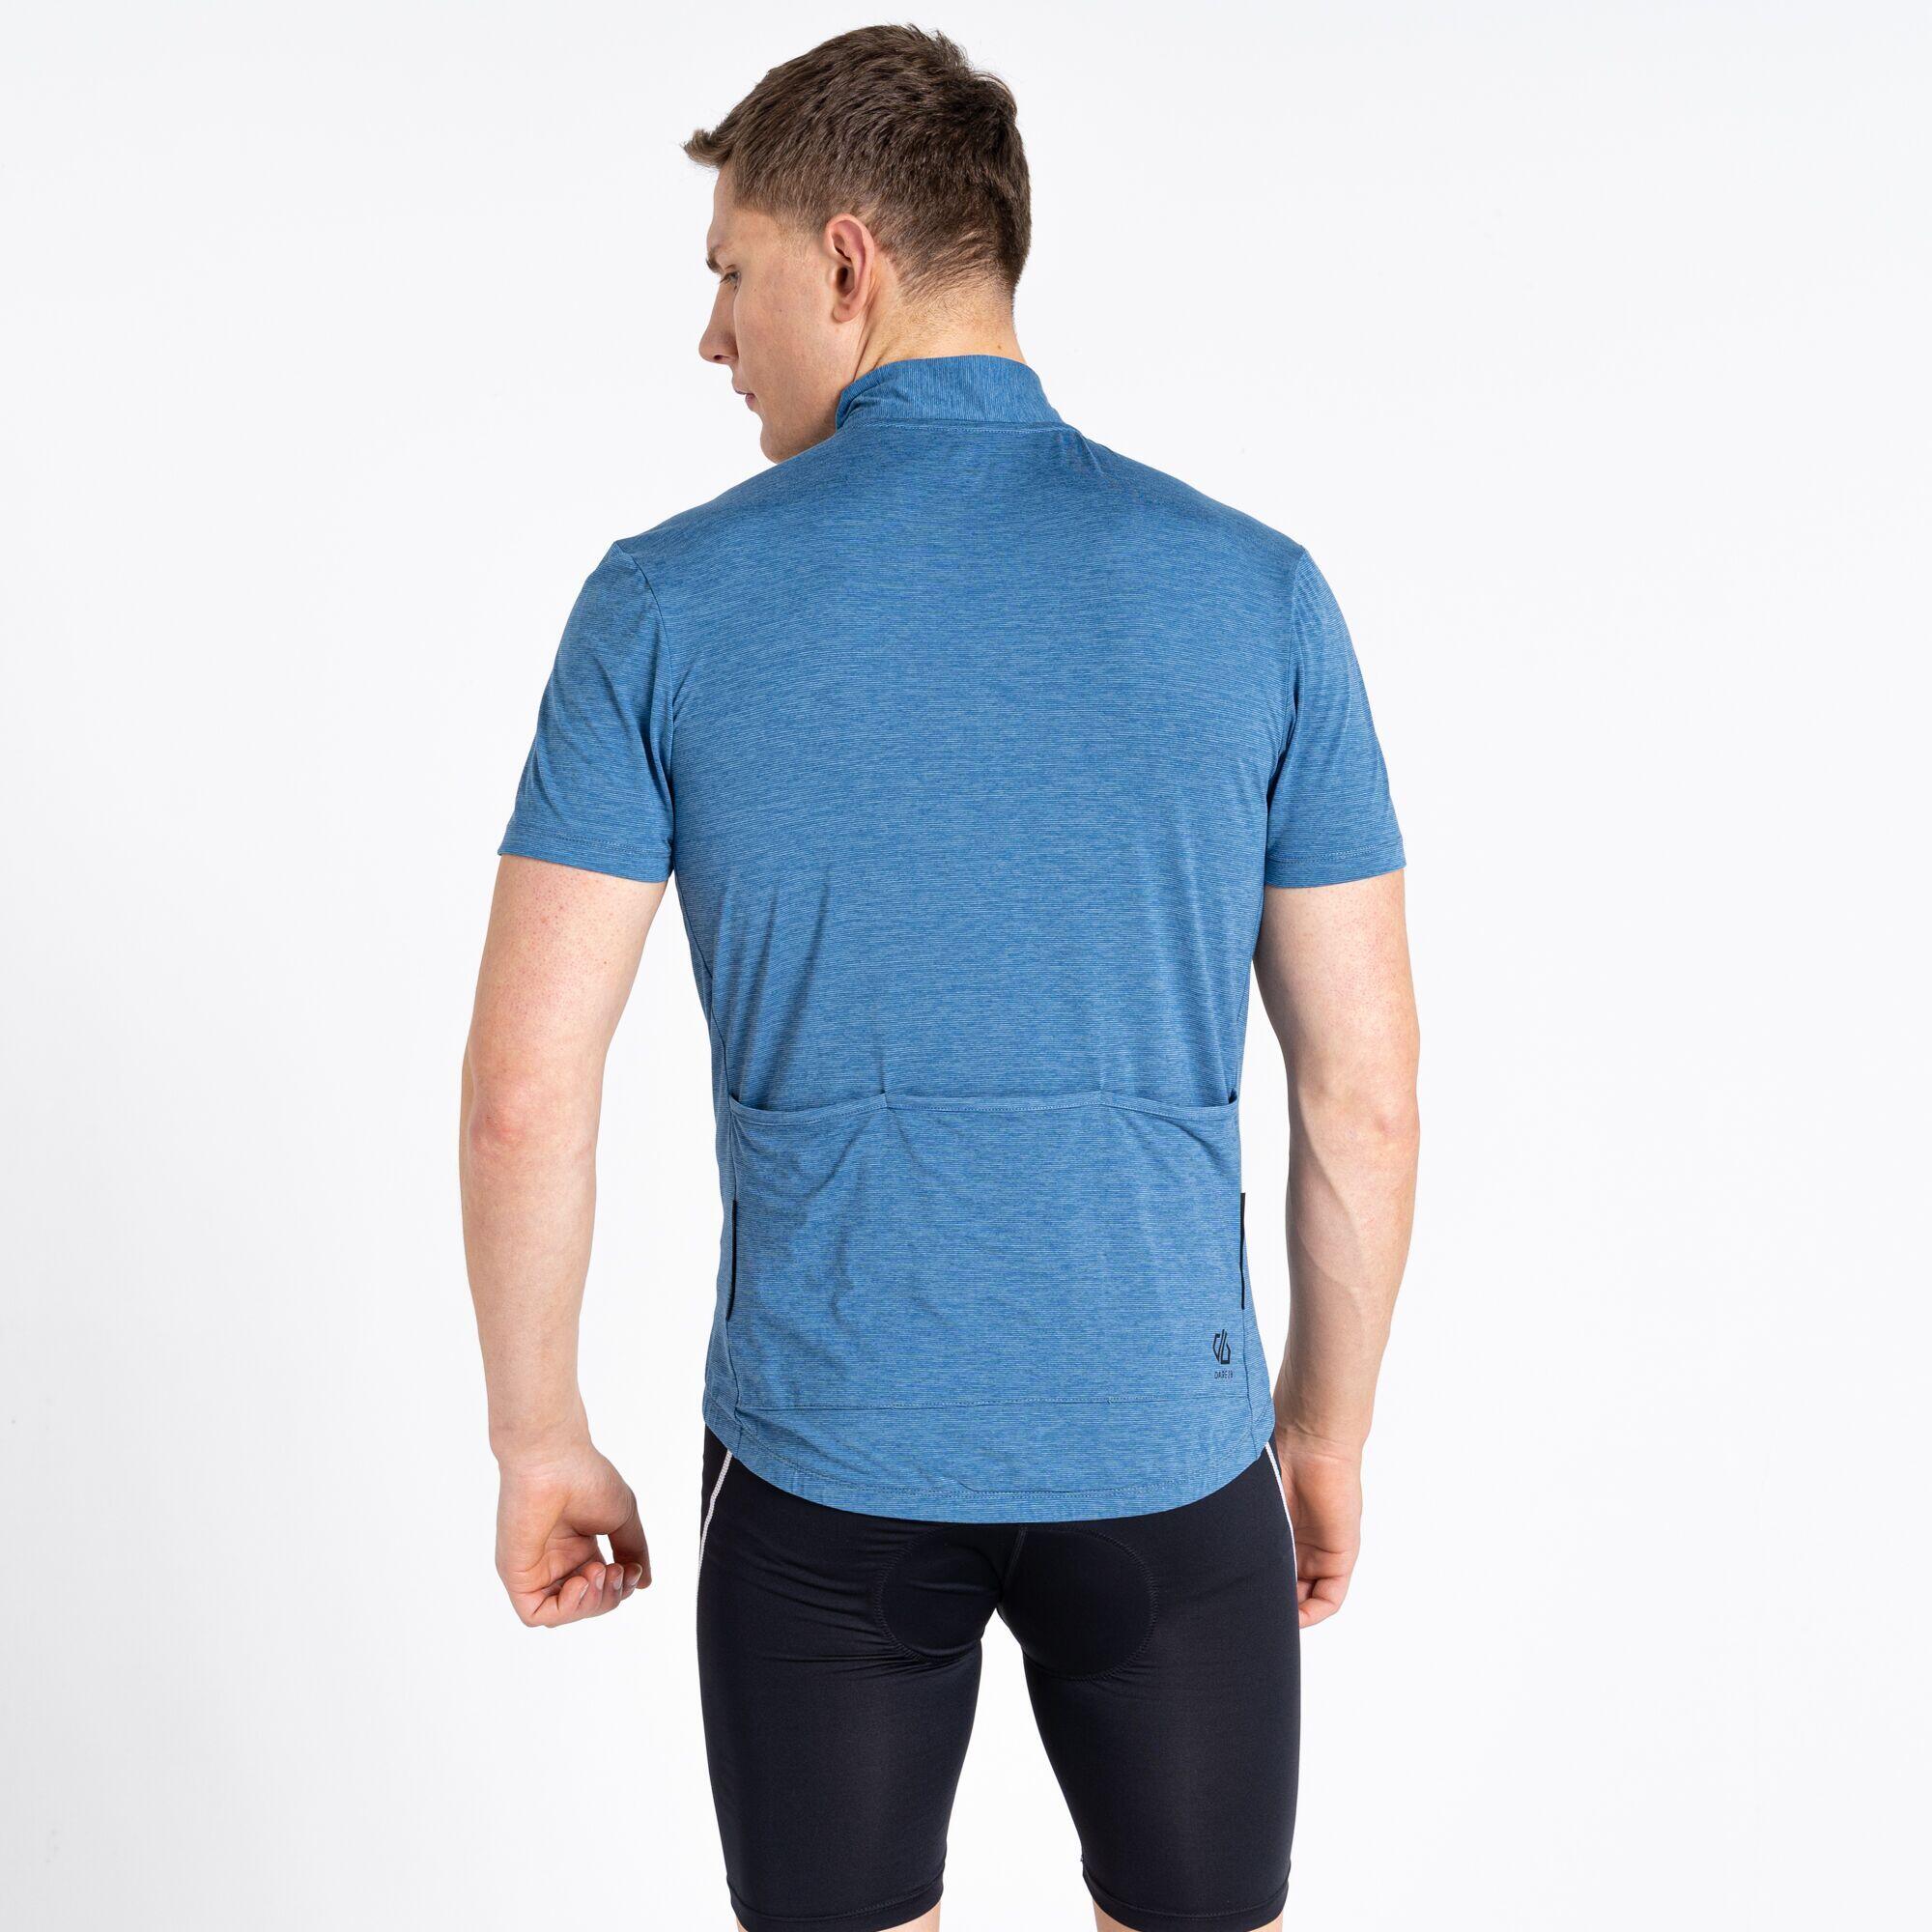 Pedal It Out Men's Cycling 1/2 Zip Short Sleeve T-Shirt - Stellar Blue Marl 6/7